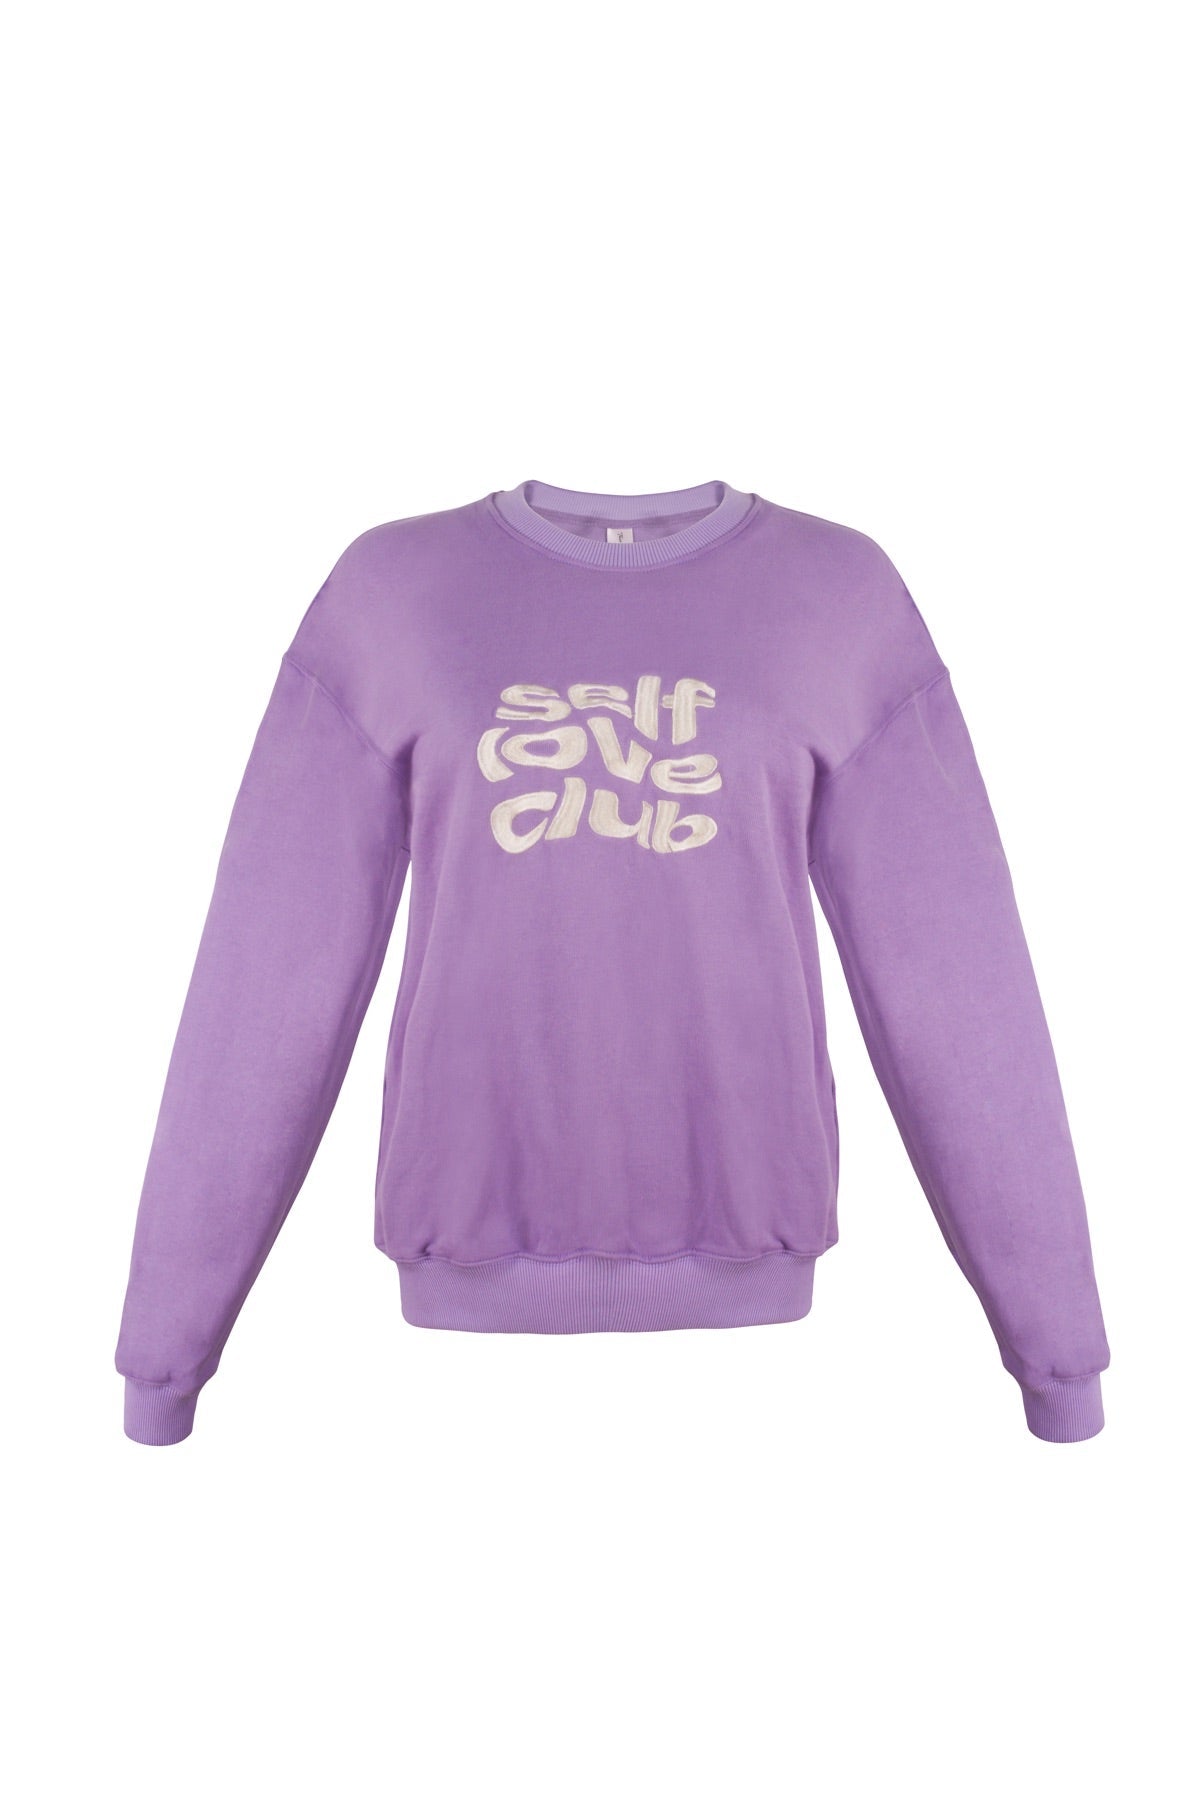 Self Love Club Sweatshirt (Lilac)